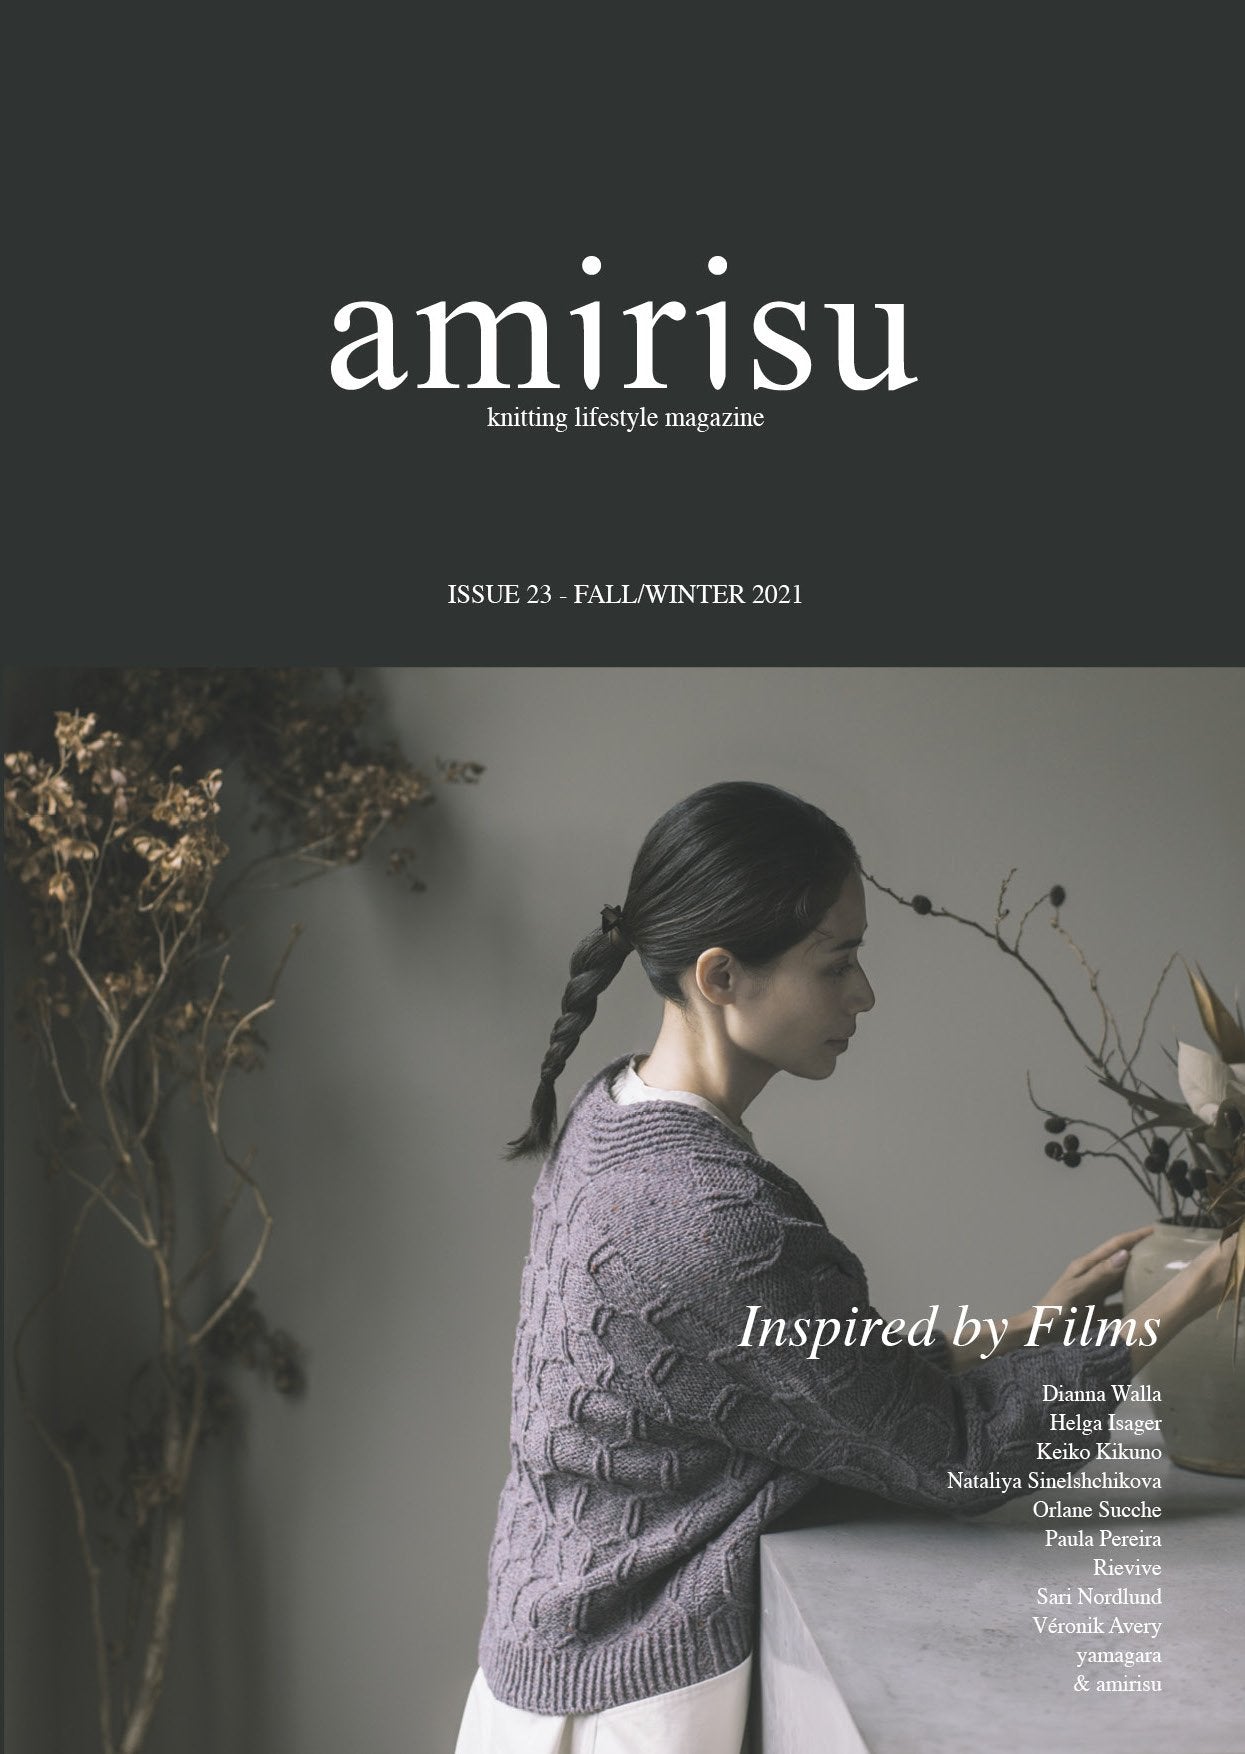 Amirisu magazine